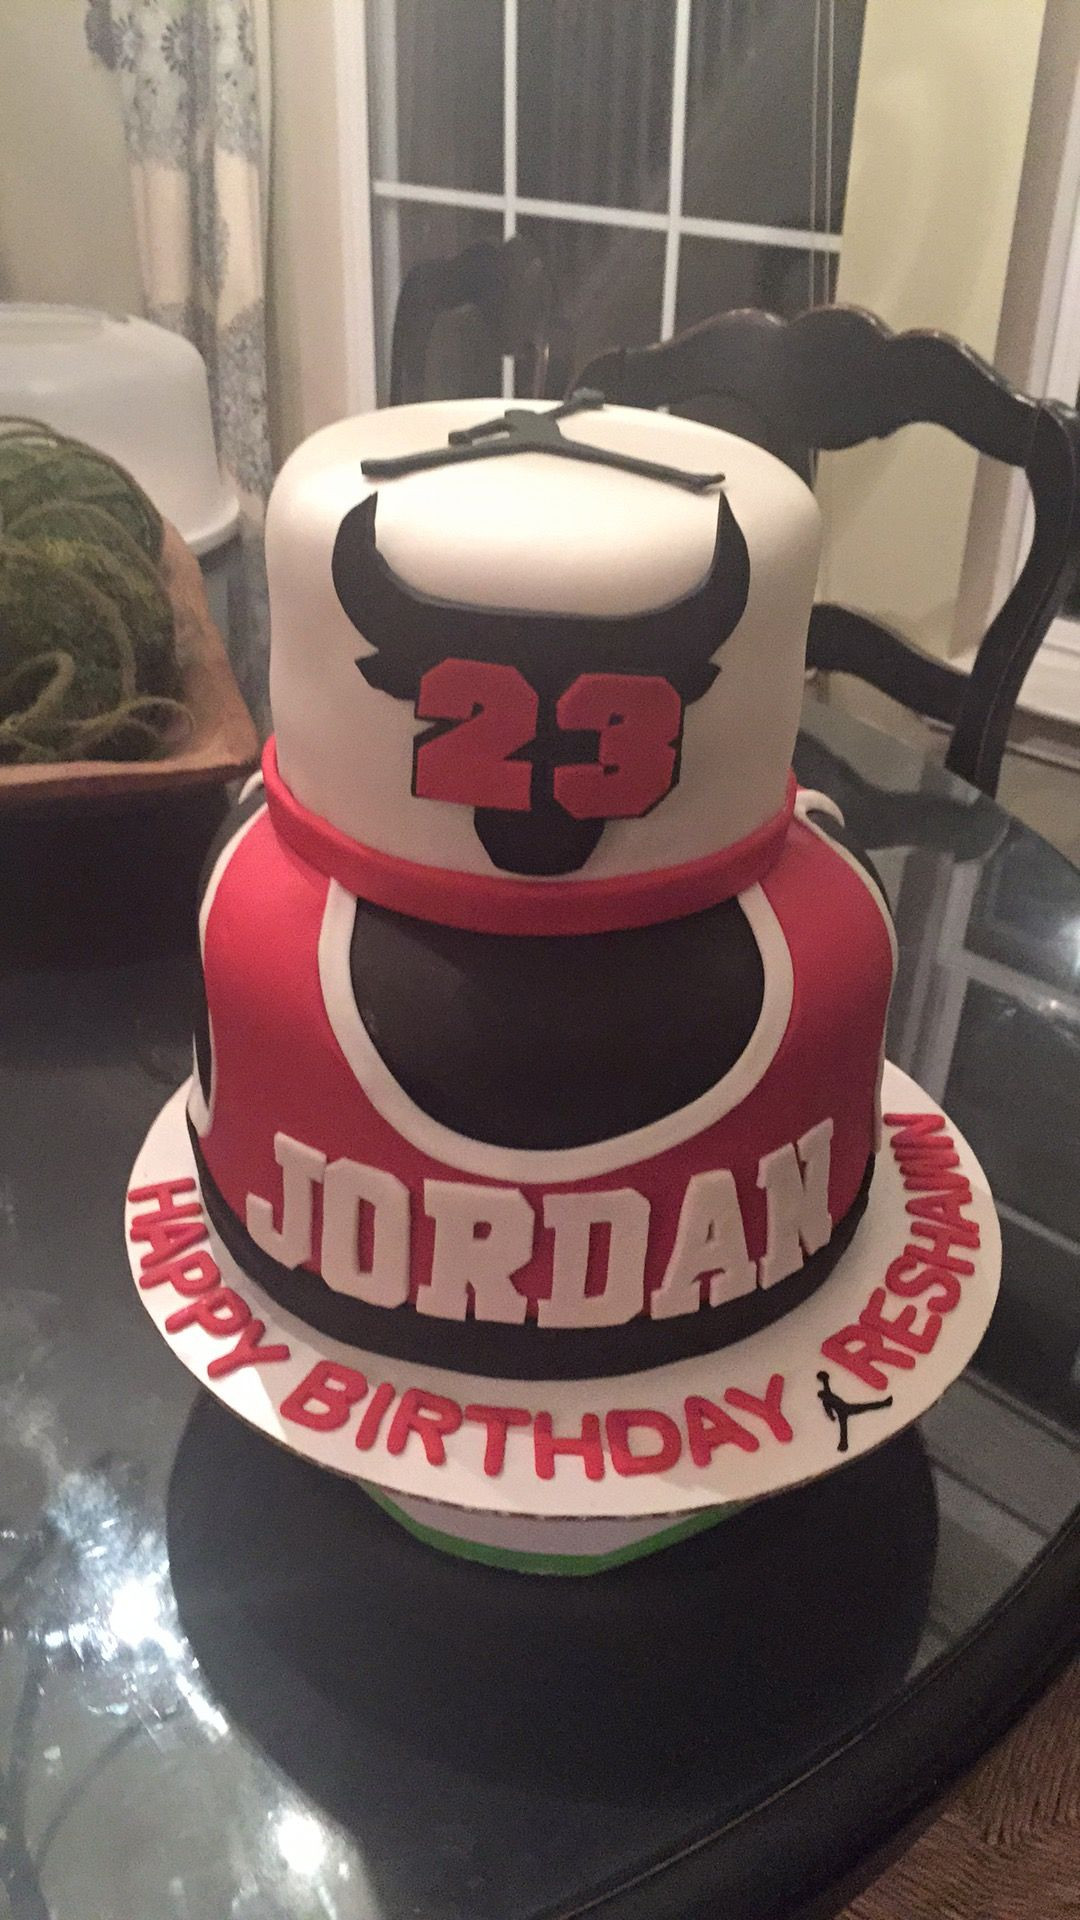 Best ideas about Jordan Birthday Cake
. Save or Pin Michael Jordan cake Cakes I ve made Now.